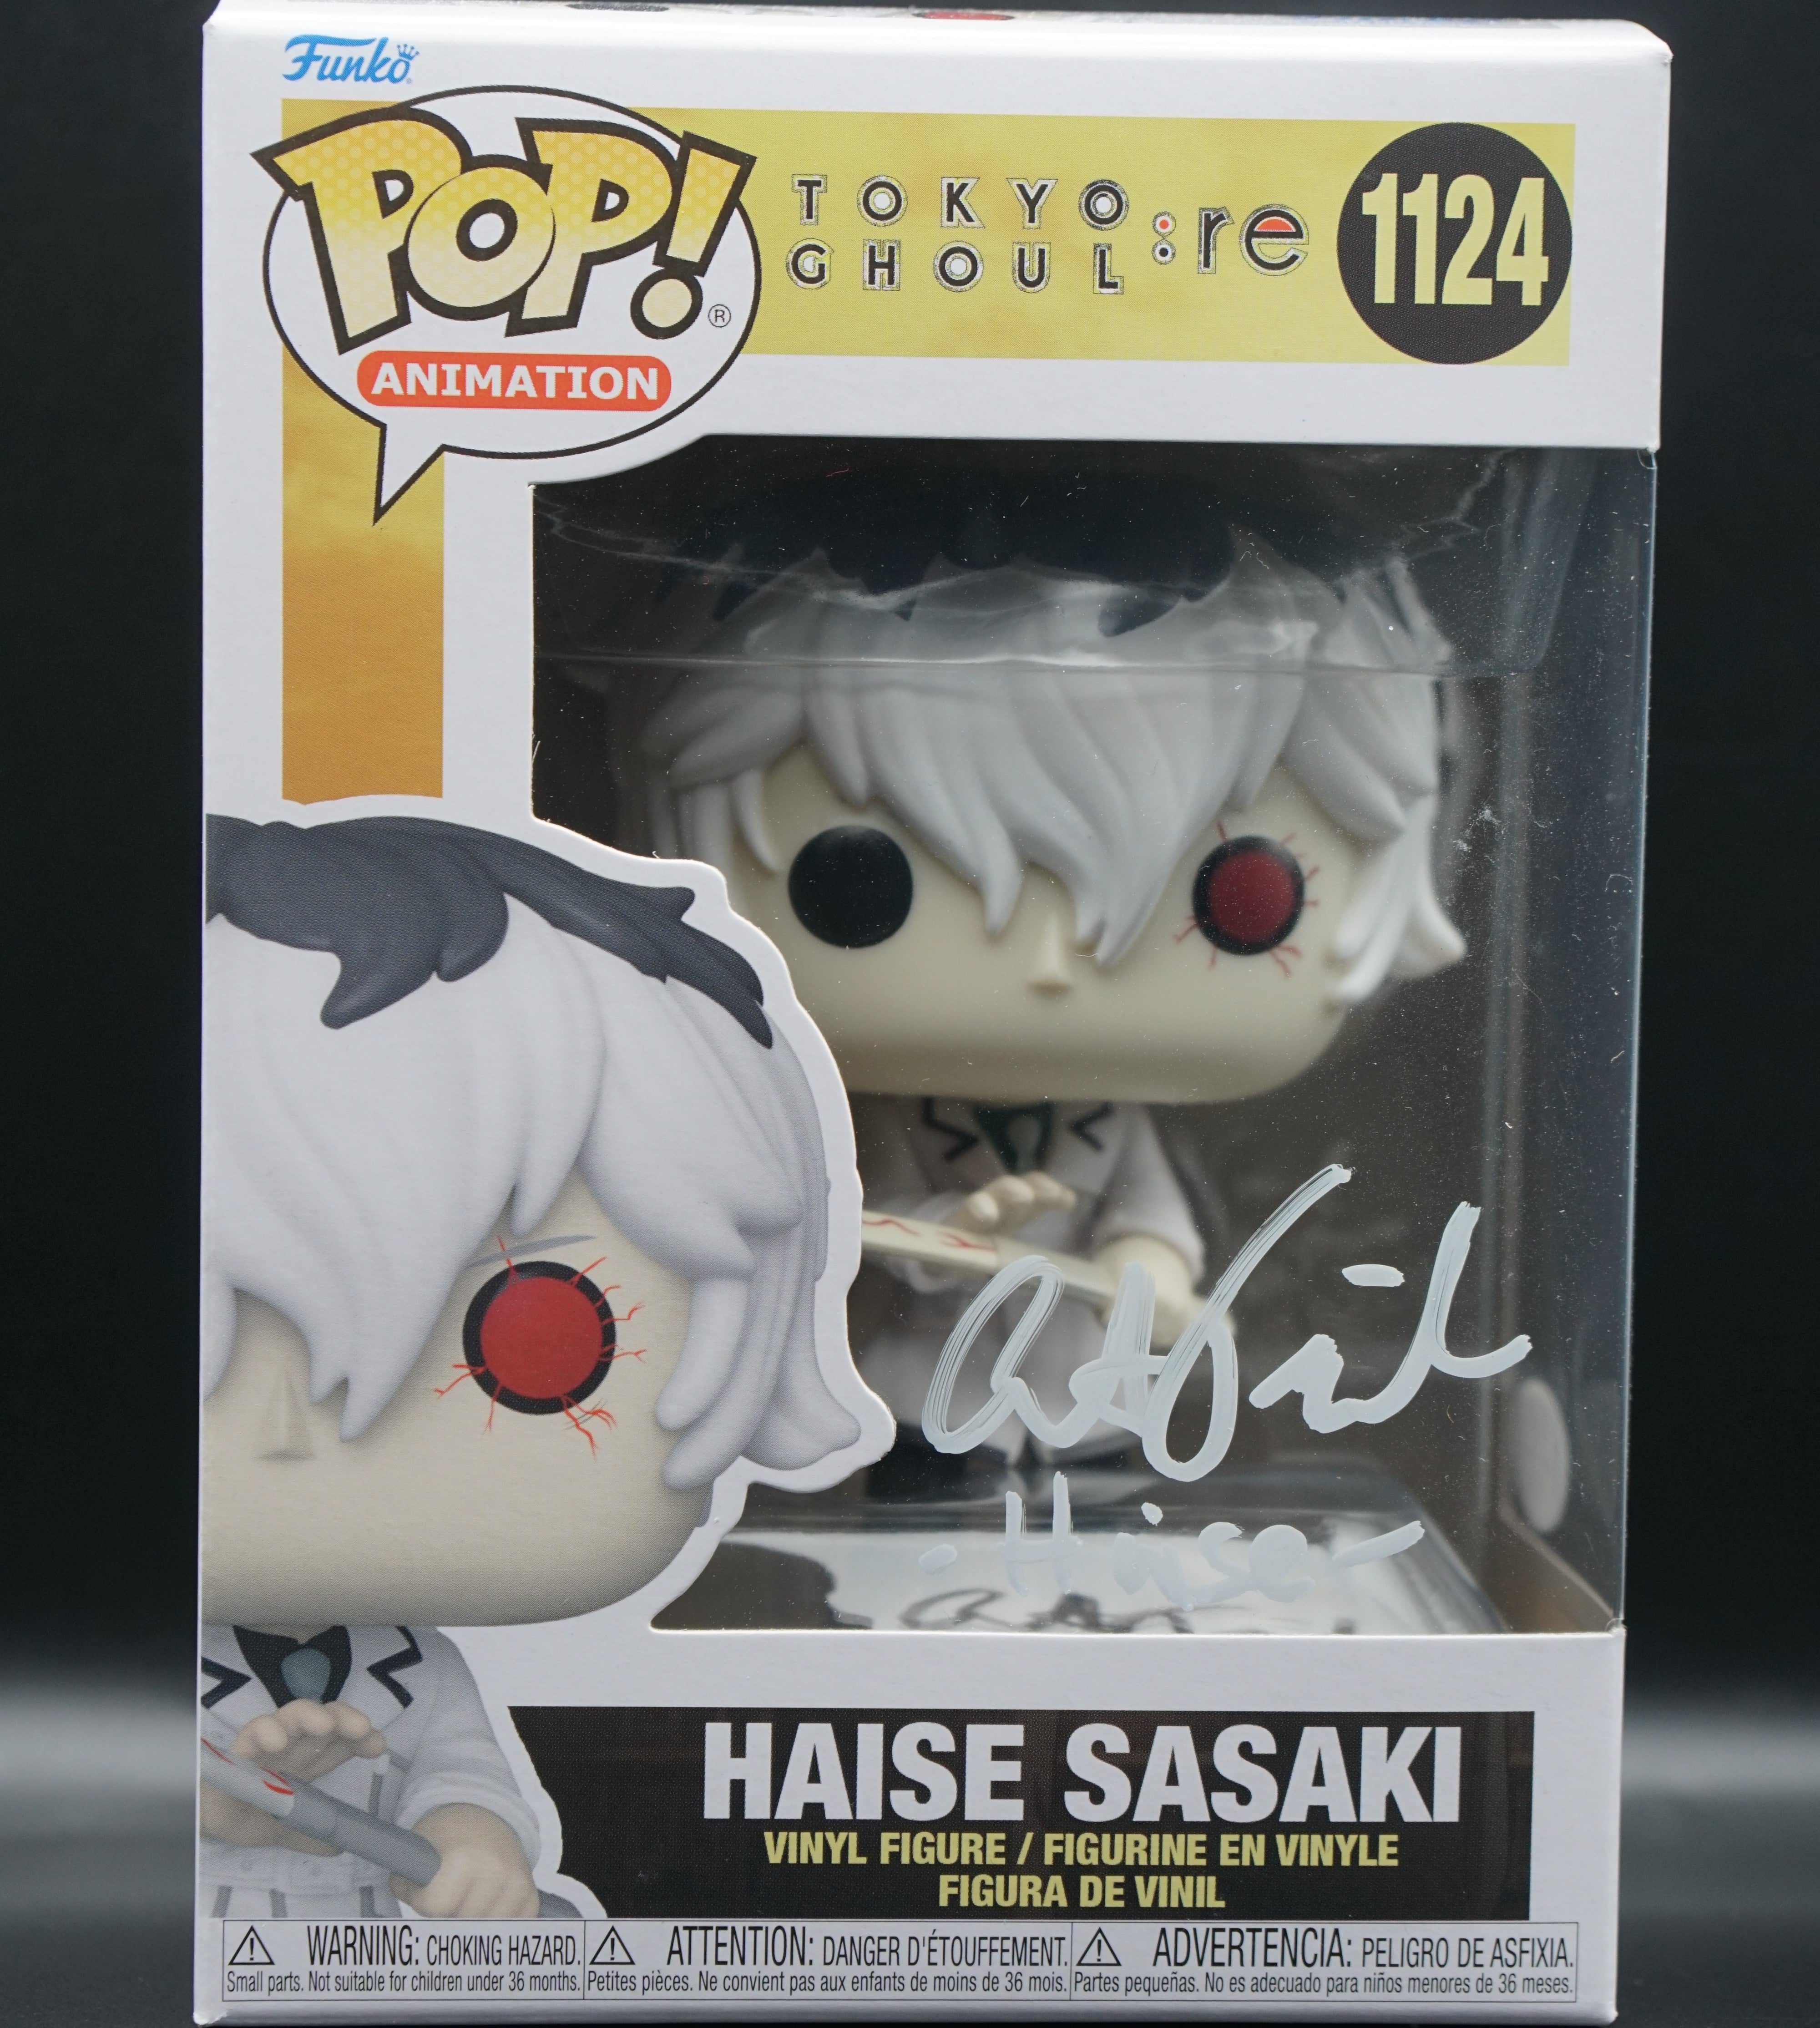 Haise Sasaki Tokyo Ghoul:RE Funko Pop #1124 PSA COA - Signed by Austin Tindle